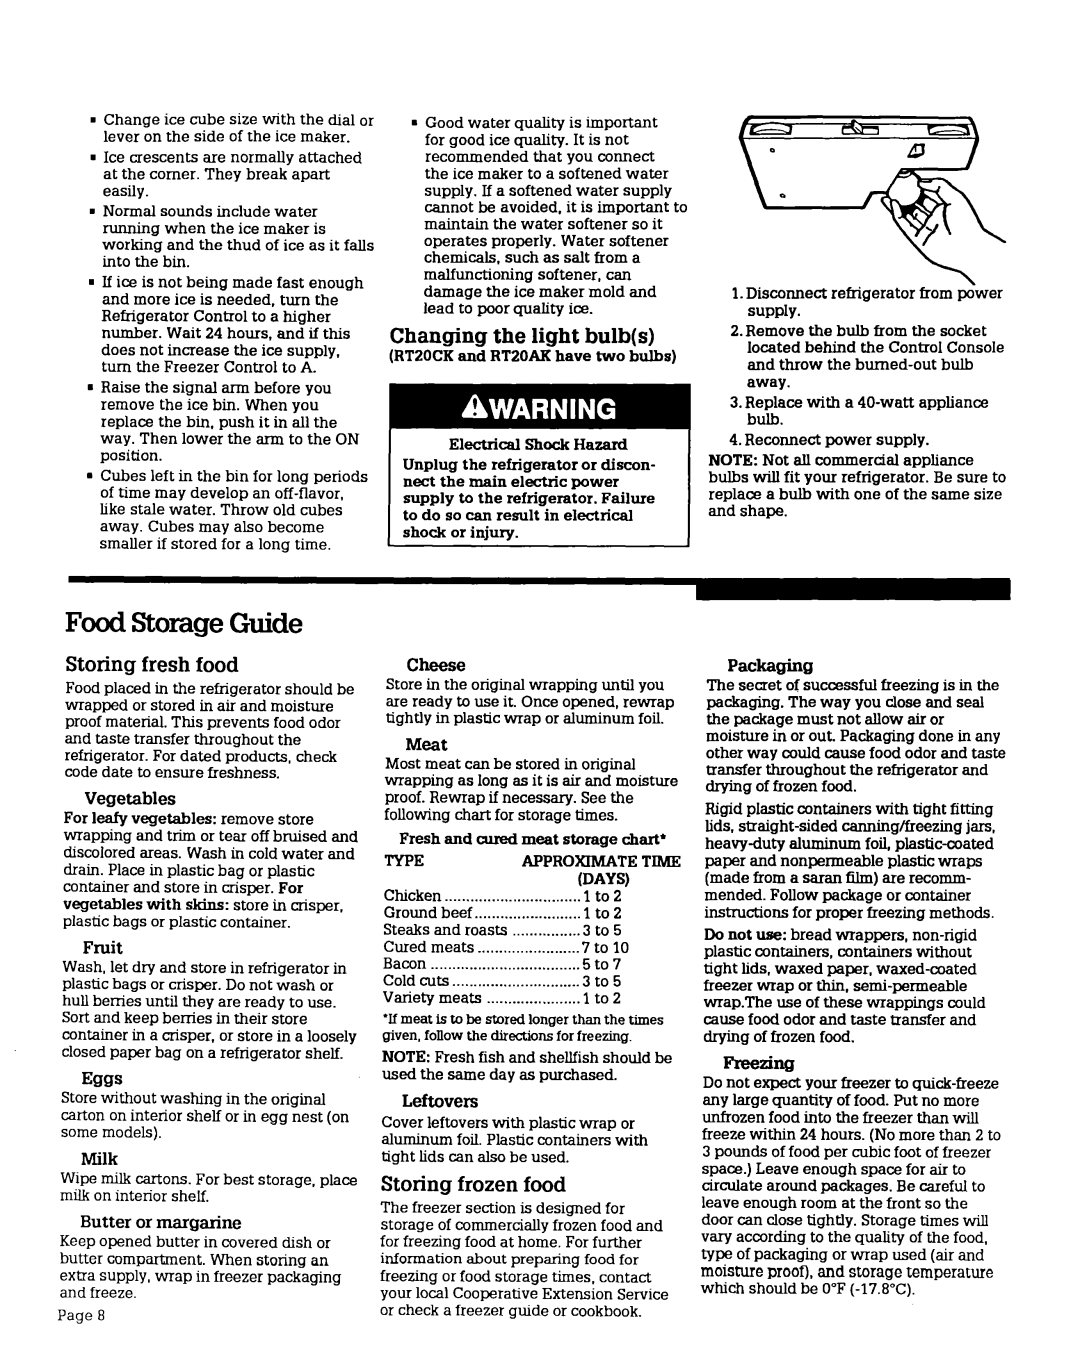 Whirlpool RT16DK, RT2OCK, RTl4CK manual Food Storage Guide, Changing the light bulbs, Storing fresh food, Storing frozen food 